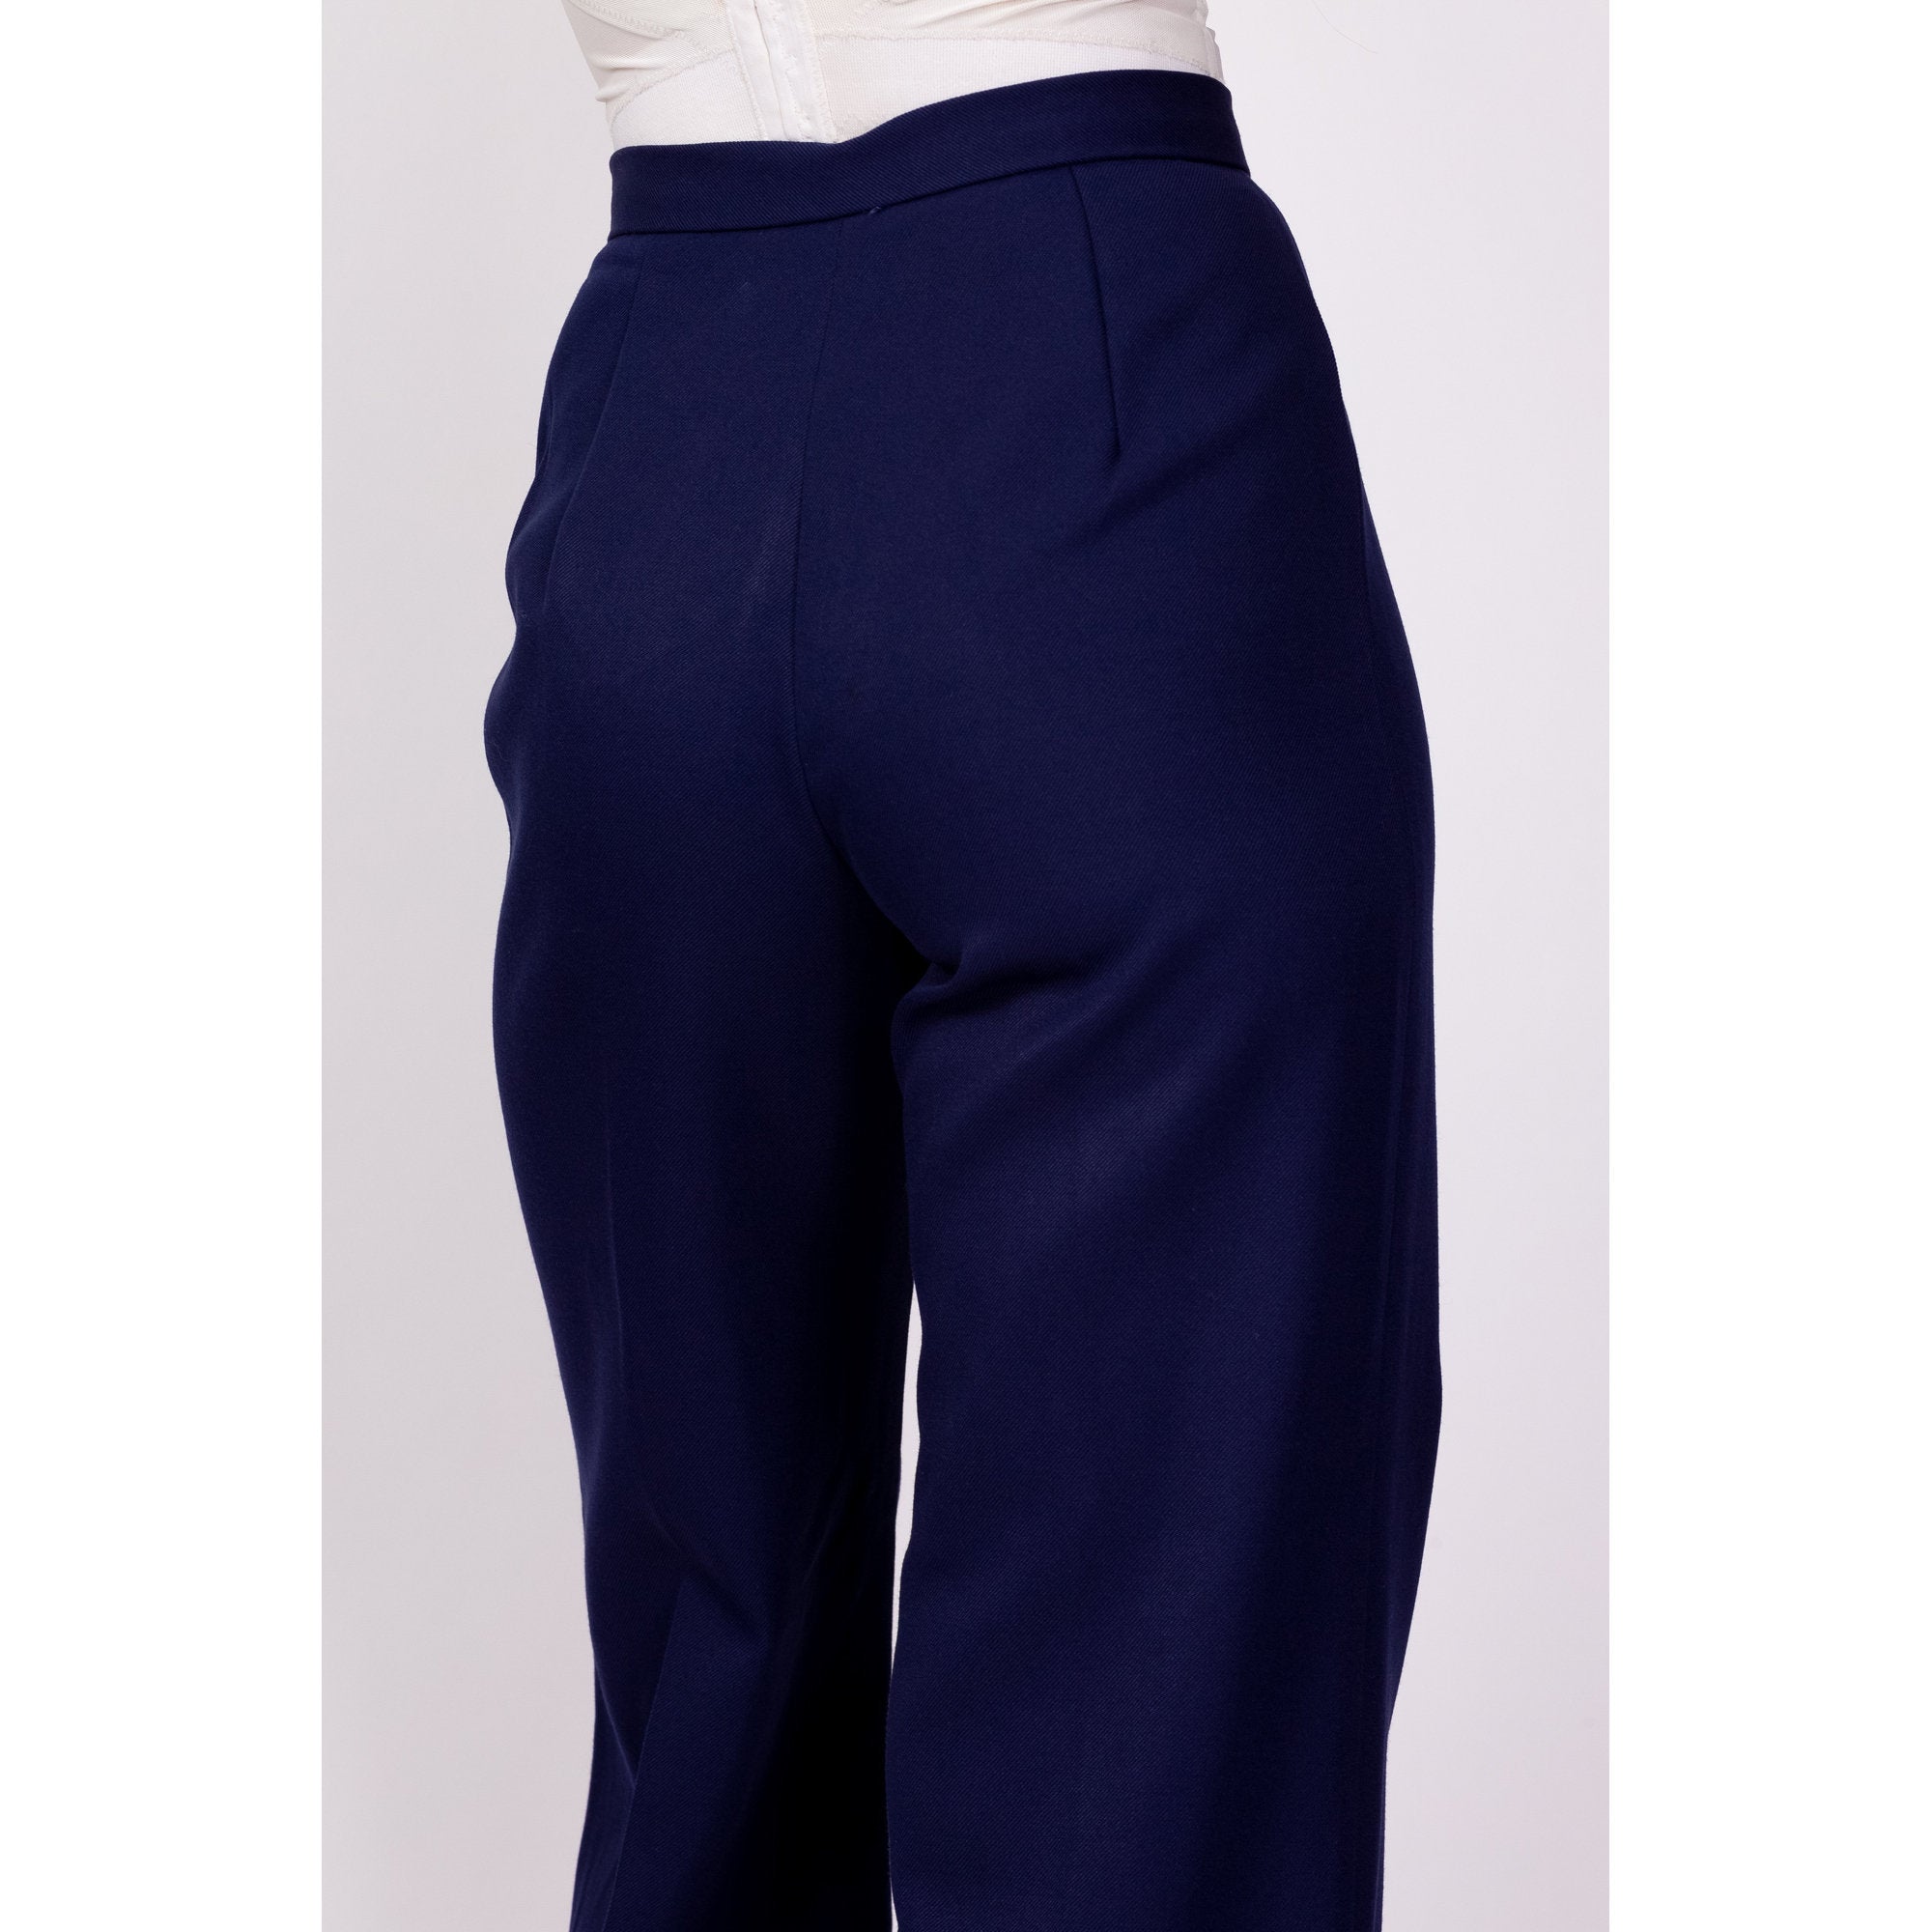 Navy Blue Girls Ladies Skinny School Stretch Trousers Invisible Zip Women  Office | eBay